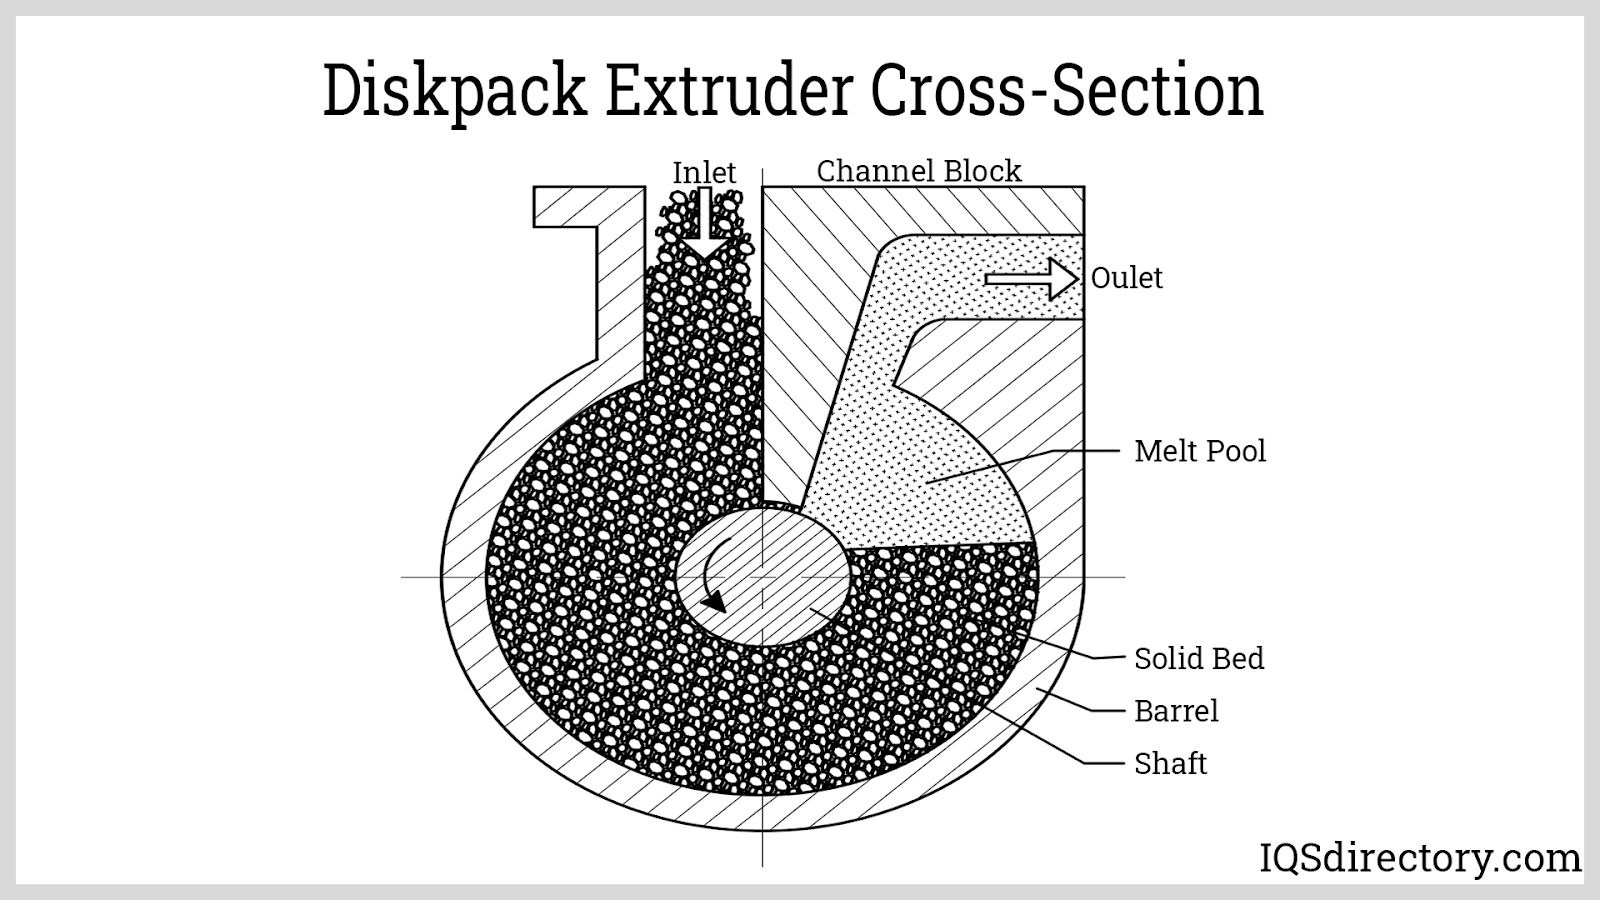 Diskpack Extruder Cross-Section